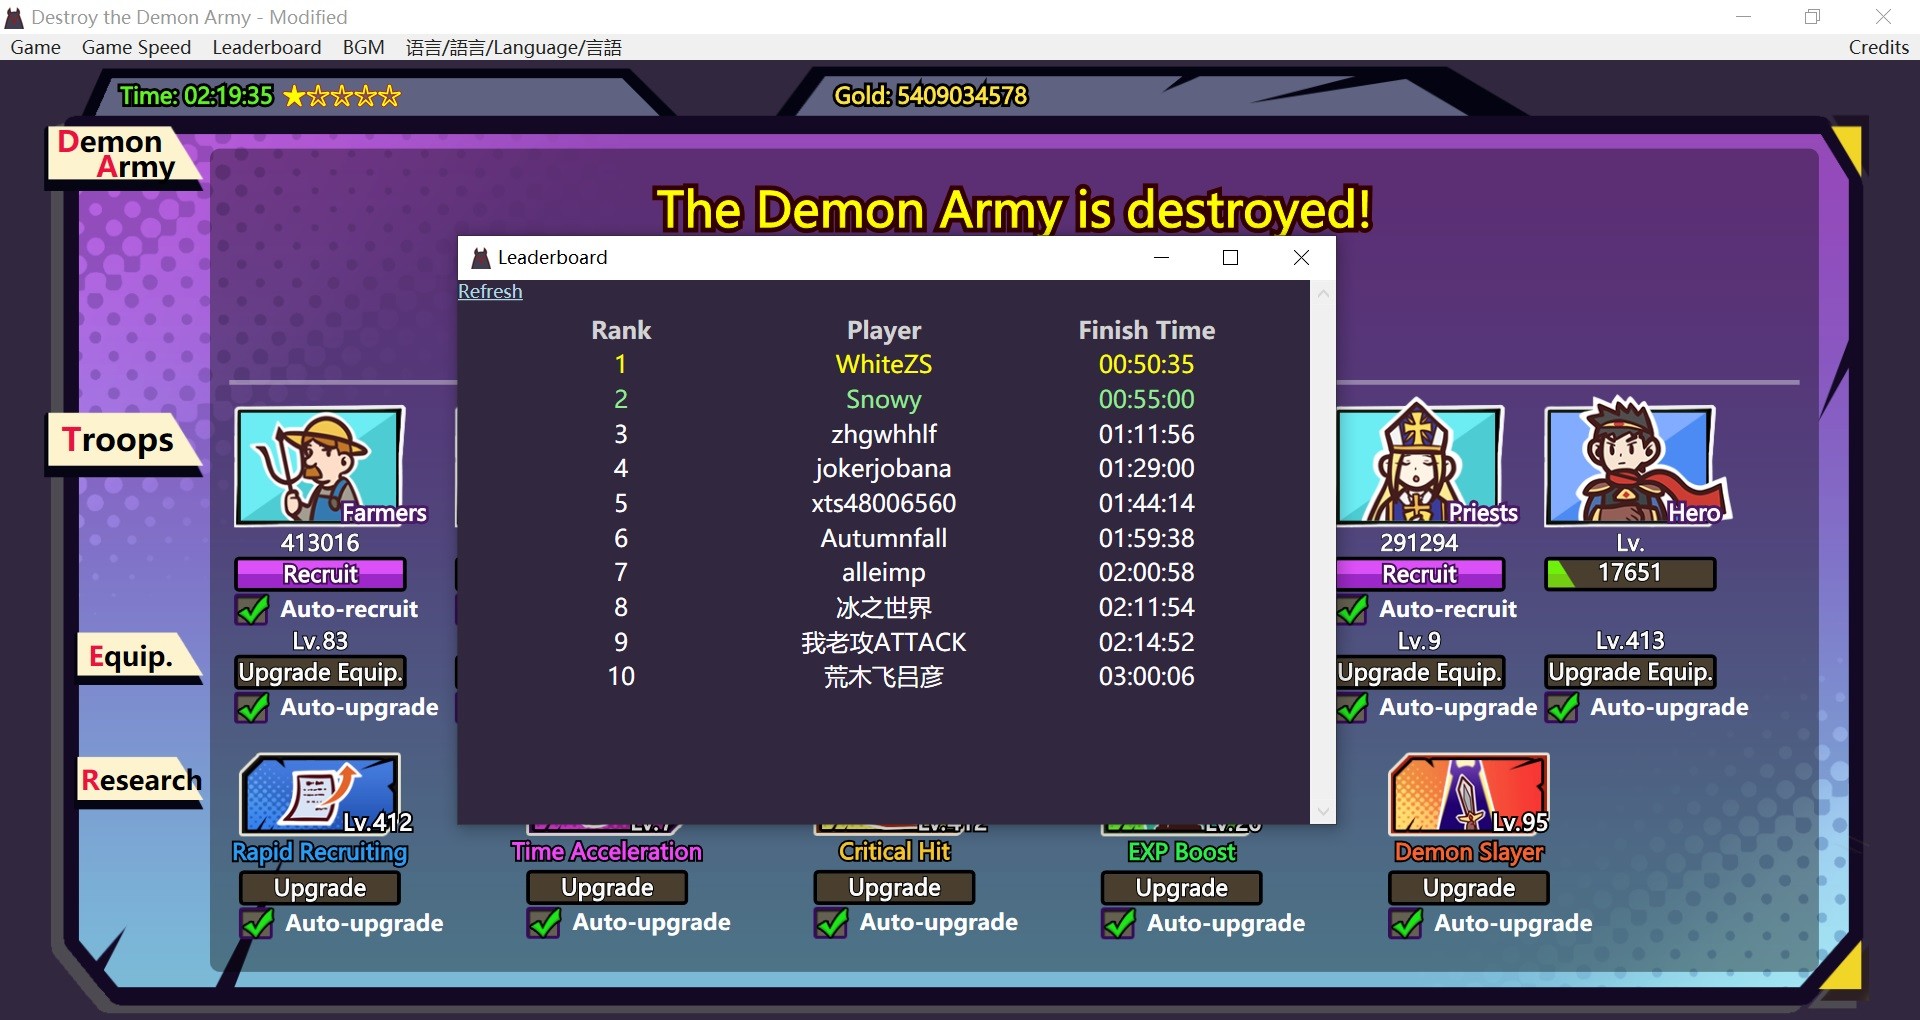 Destroy the Demon Army - Modified screenshot